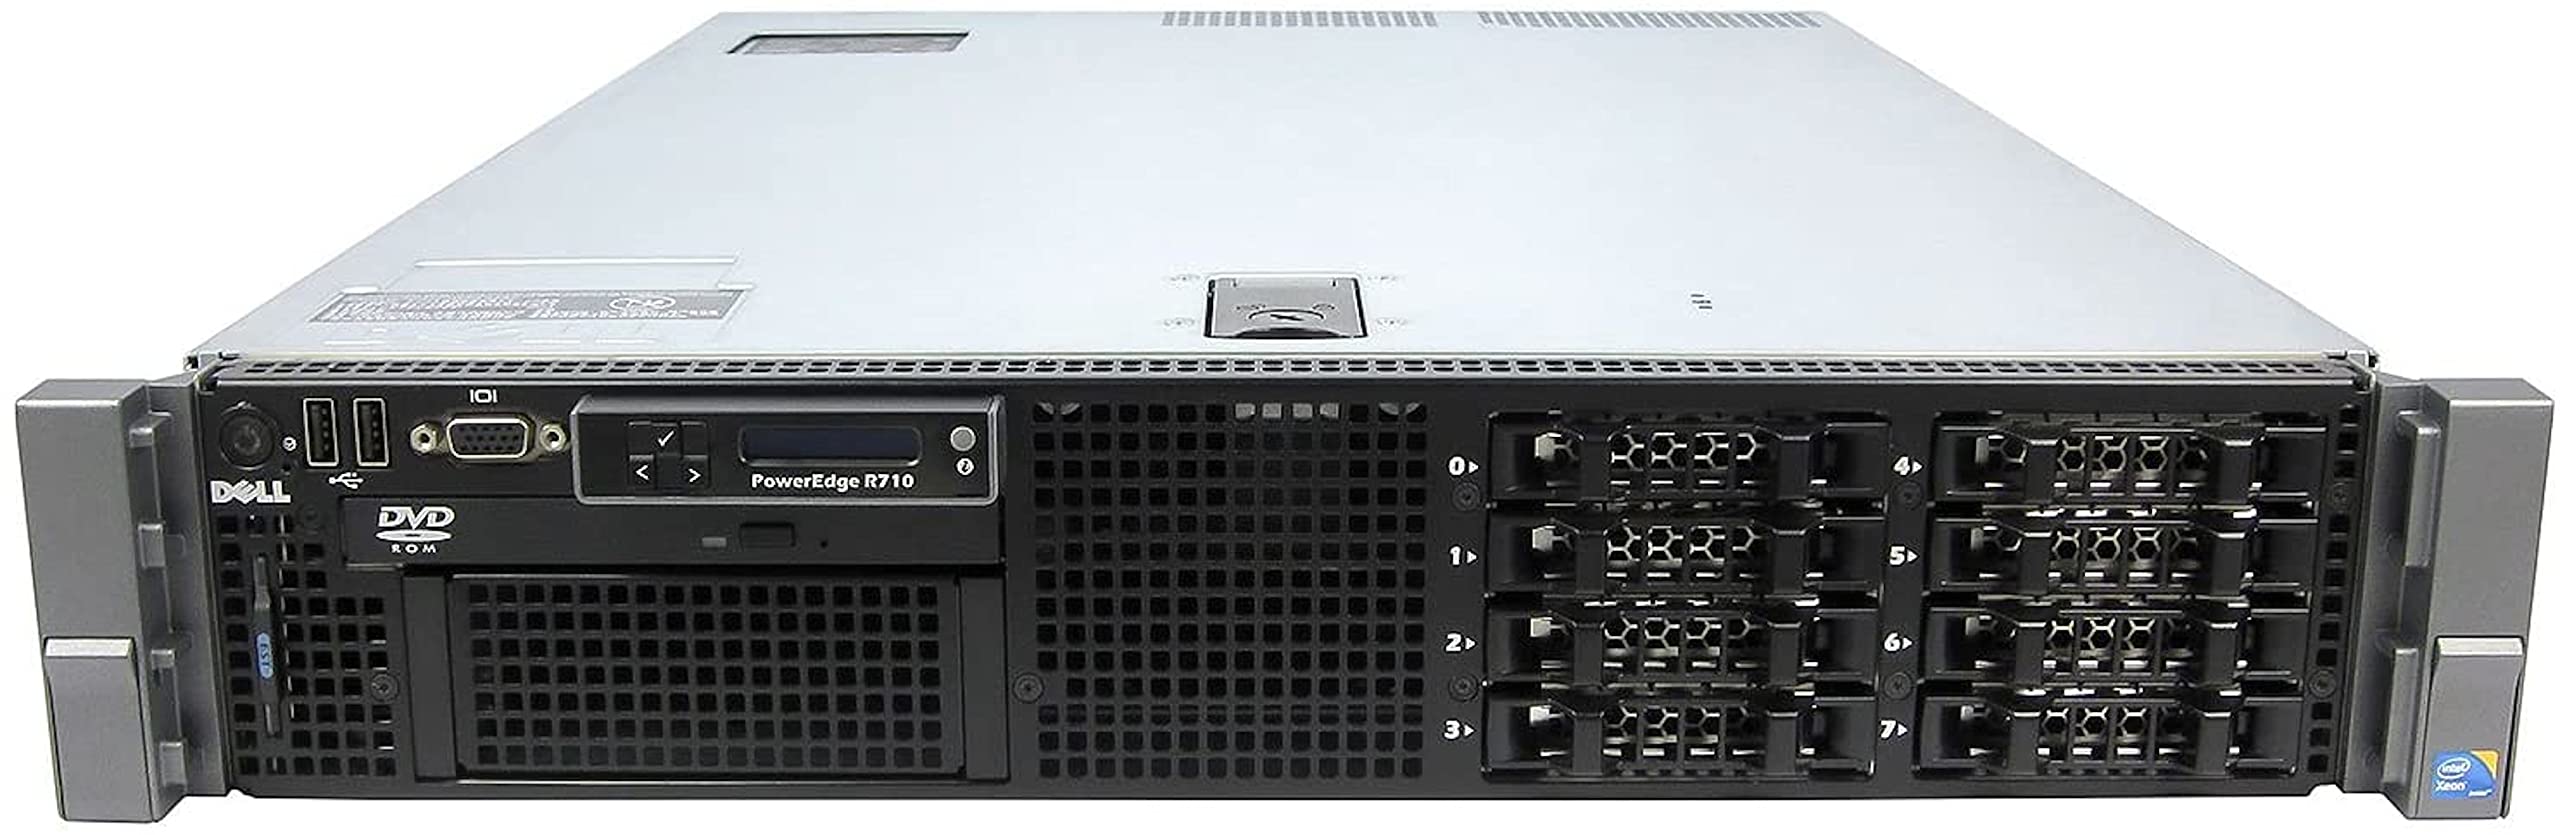 TechMikeNY Server 2X E5-2680v3 2.50Ghz 24-Core 64GB 3X New 1TB SSD PowerEdge R730xd Renewed 